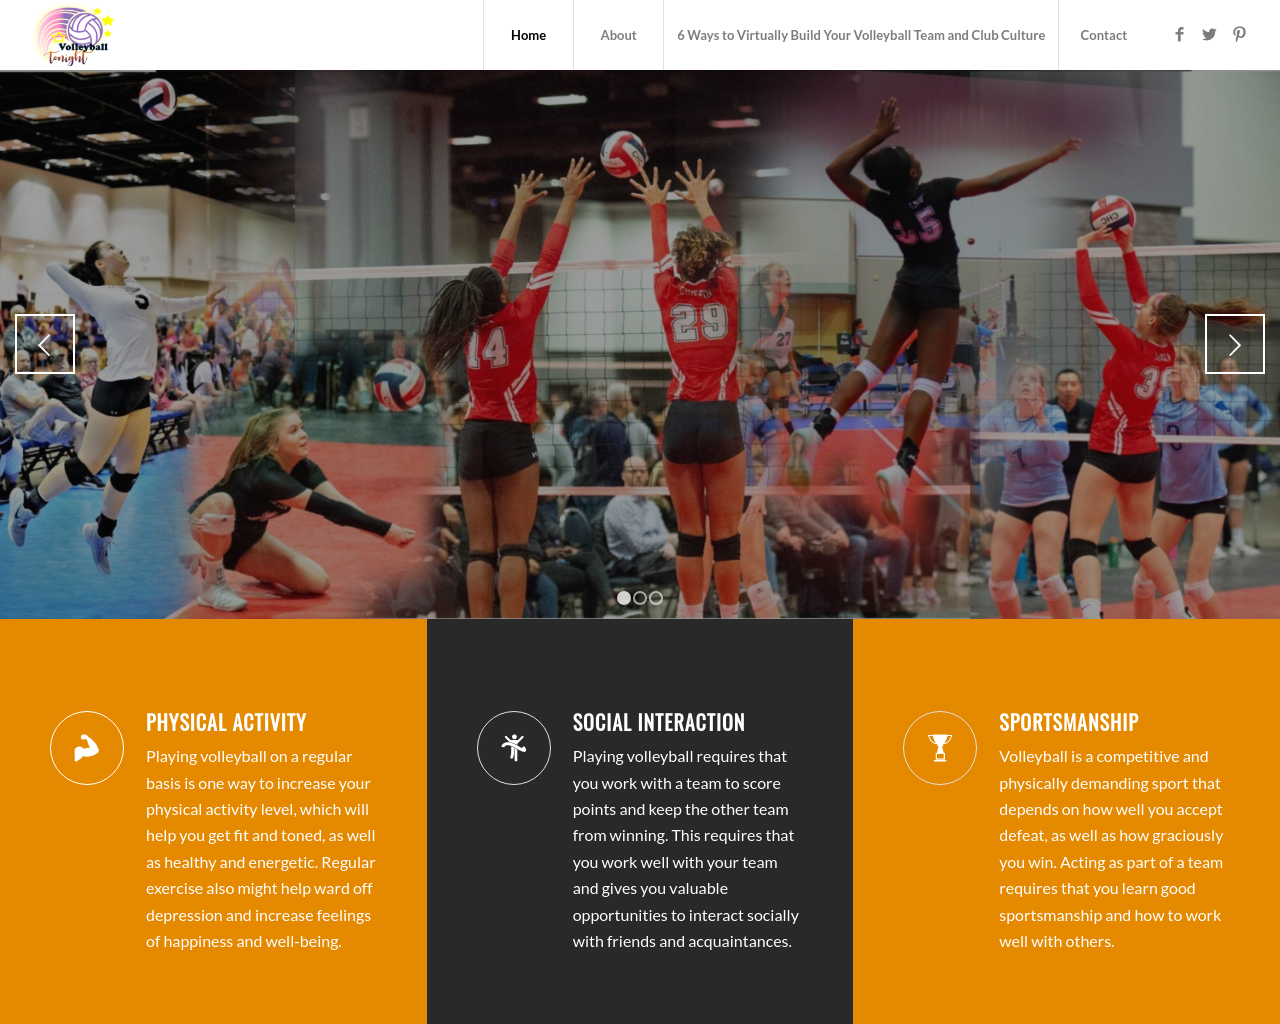 volleyballtonight.com